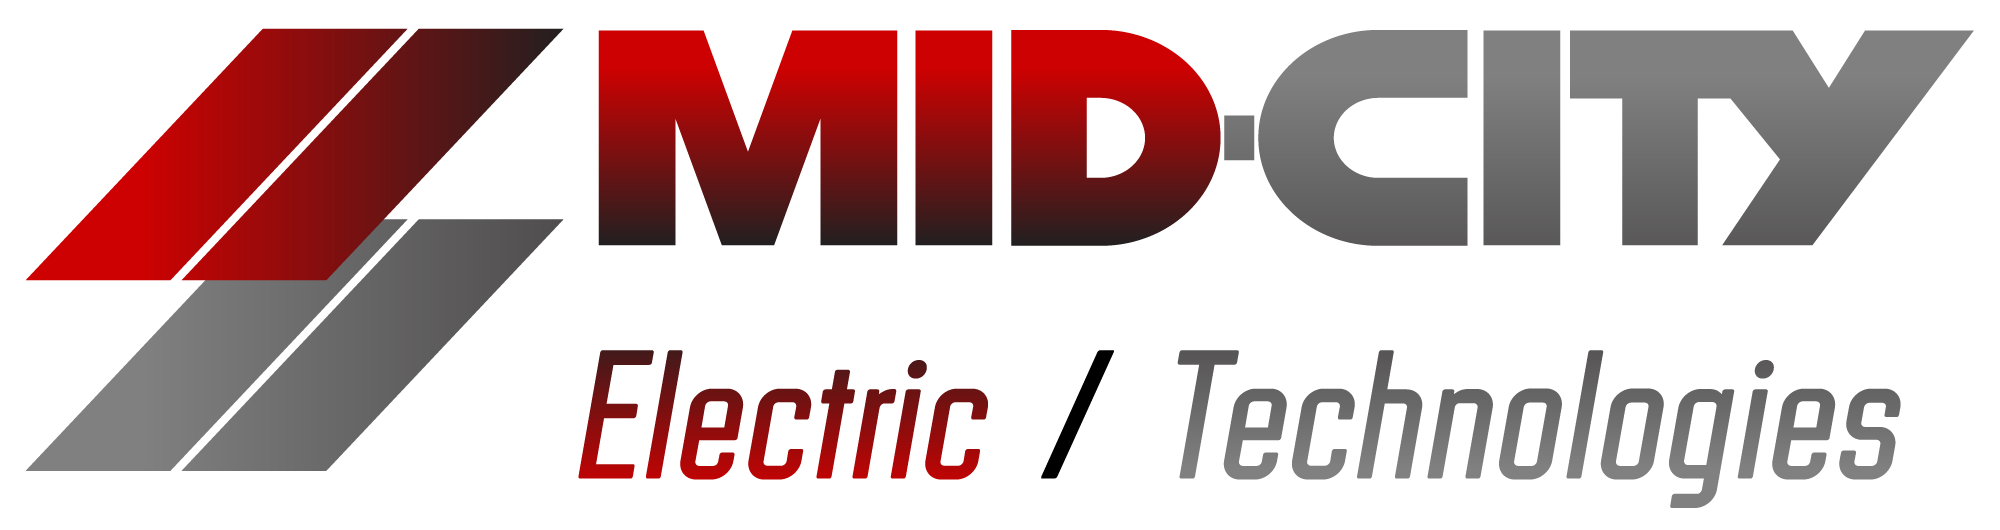 Mid-City Electric Company Logo